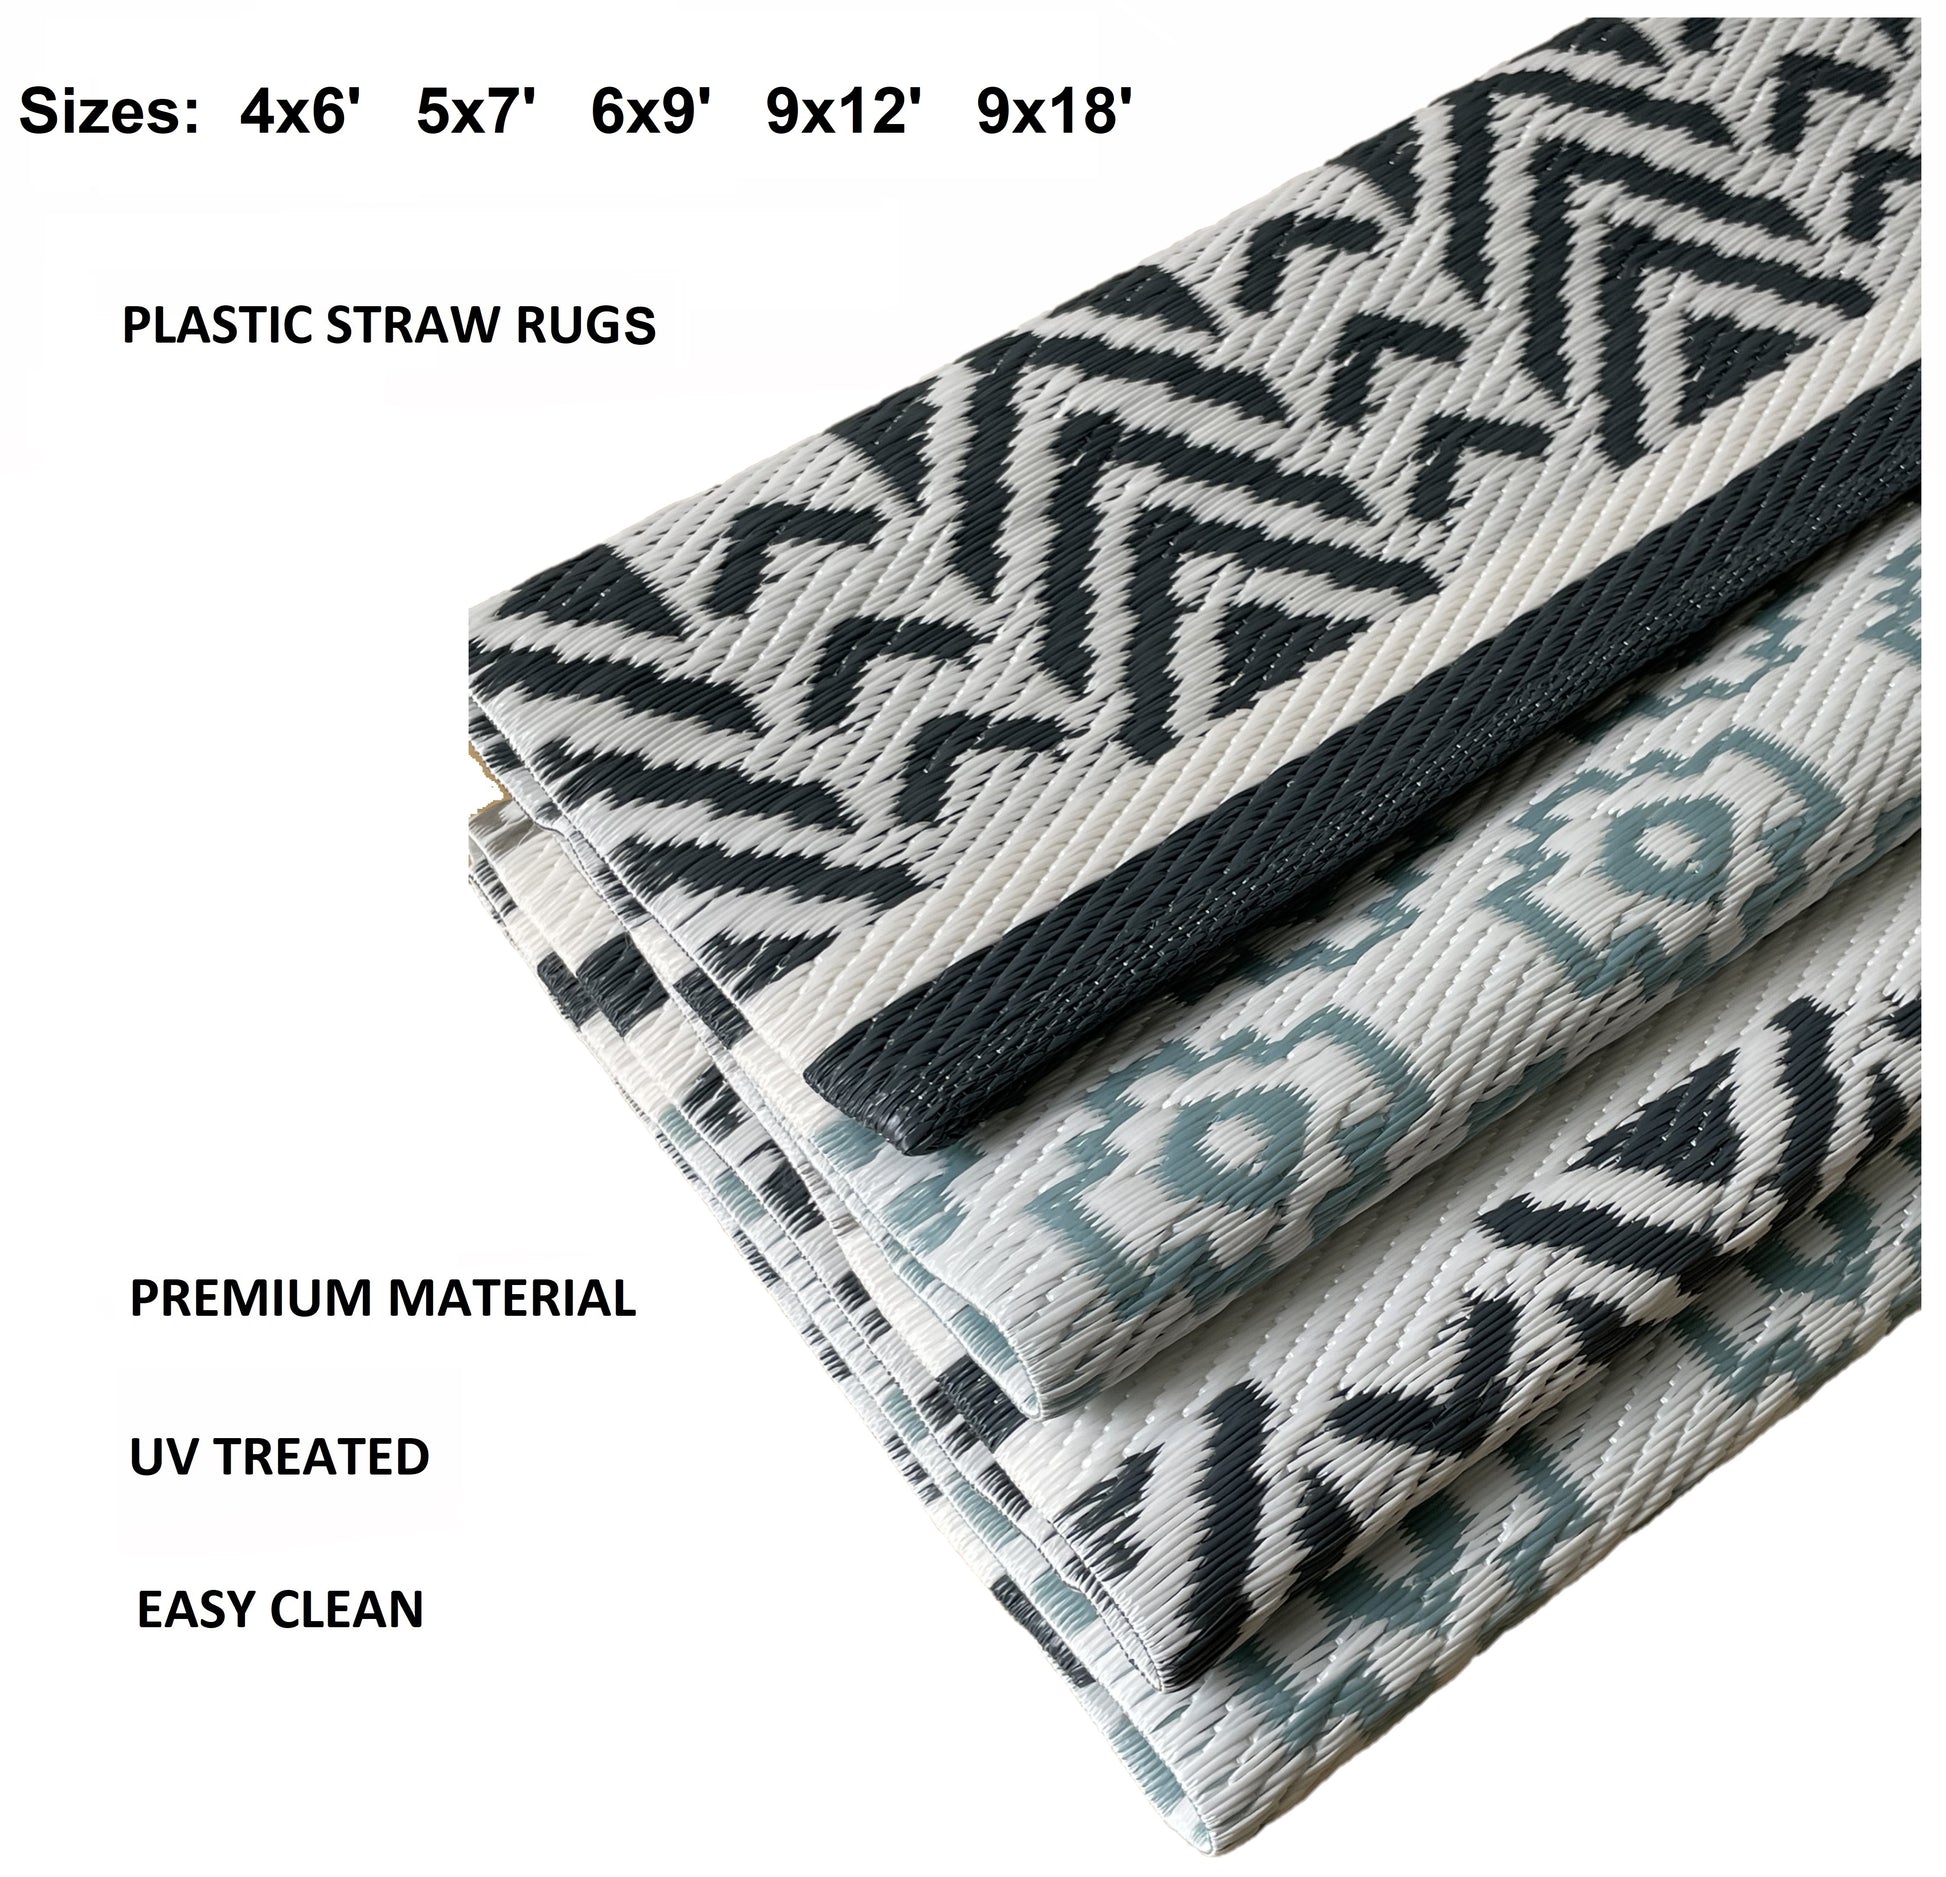 Outdoor plastic straw rug 9x18 9x12 6x9